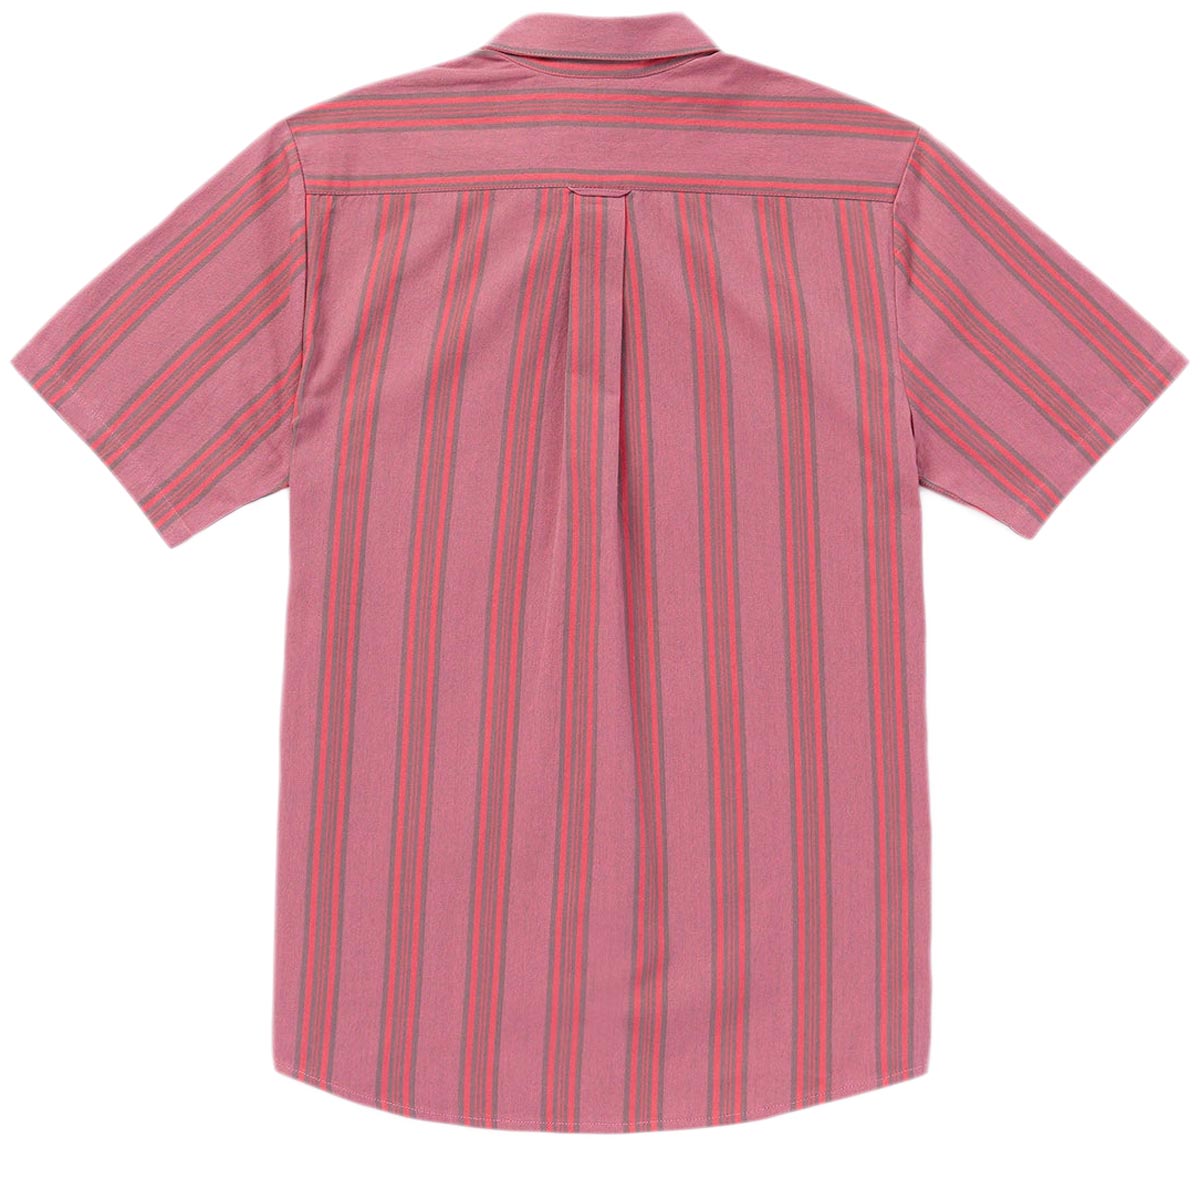 Volcom Newbar Stripe Shirt - Washed Ruby image 5